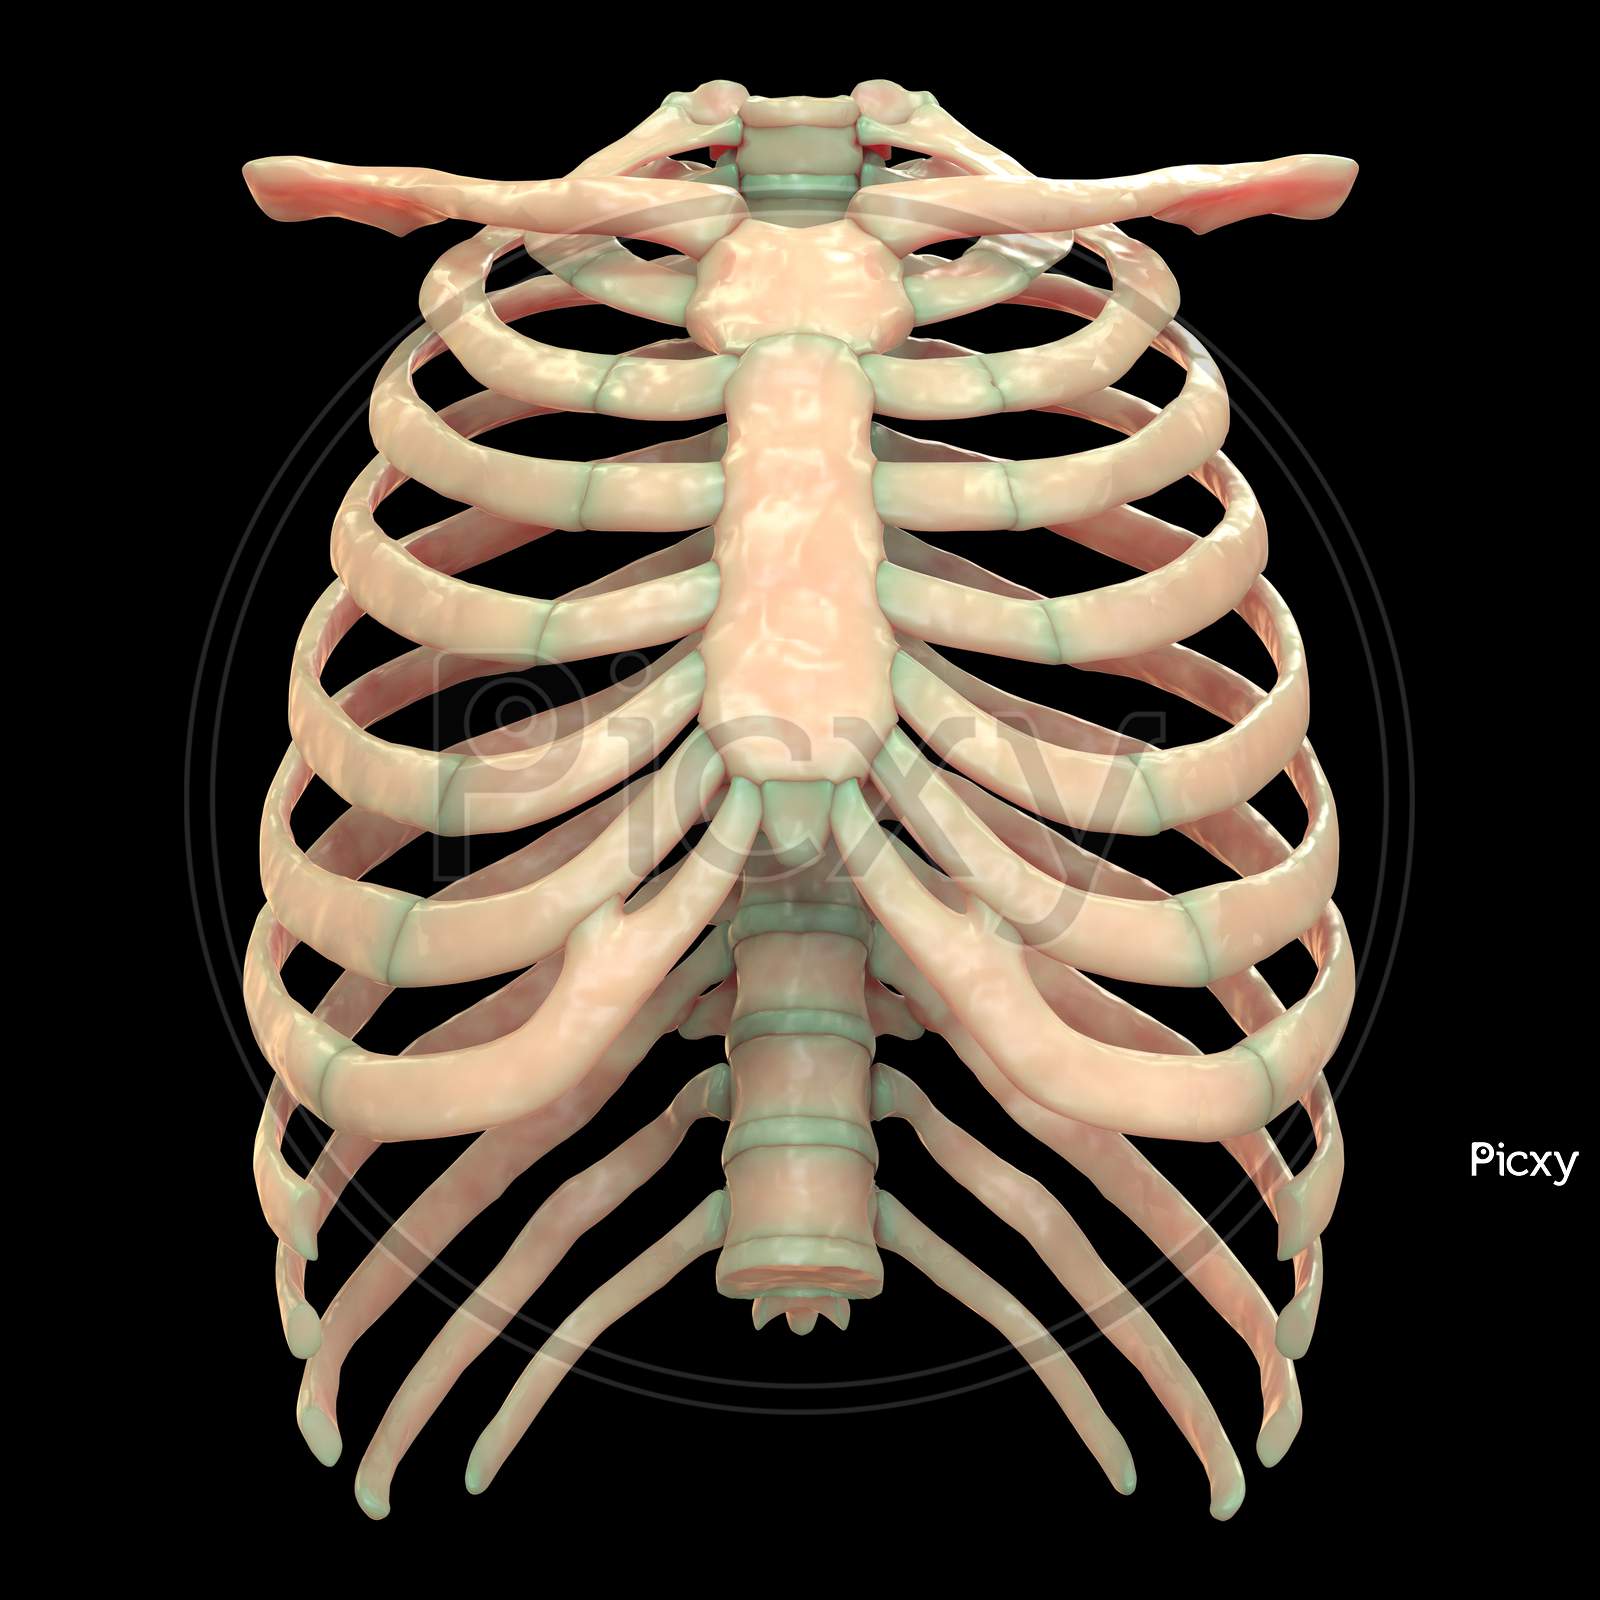 Rib Cage Of Human Body Thoracic Cage Anatomy Body Human Art Print